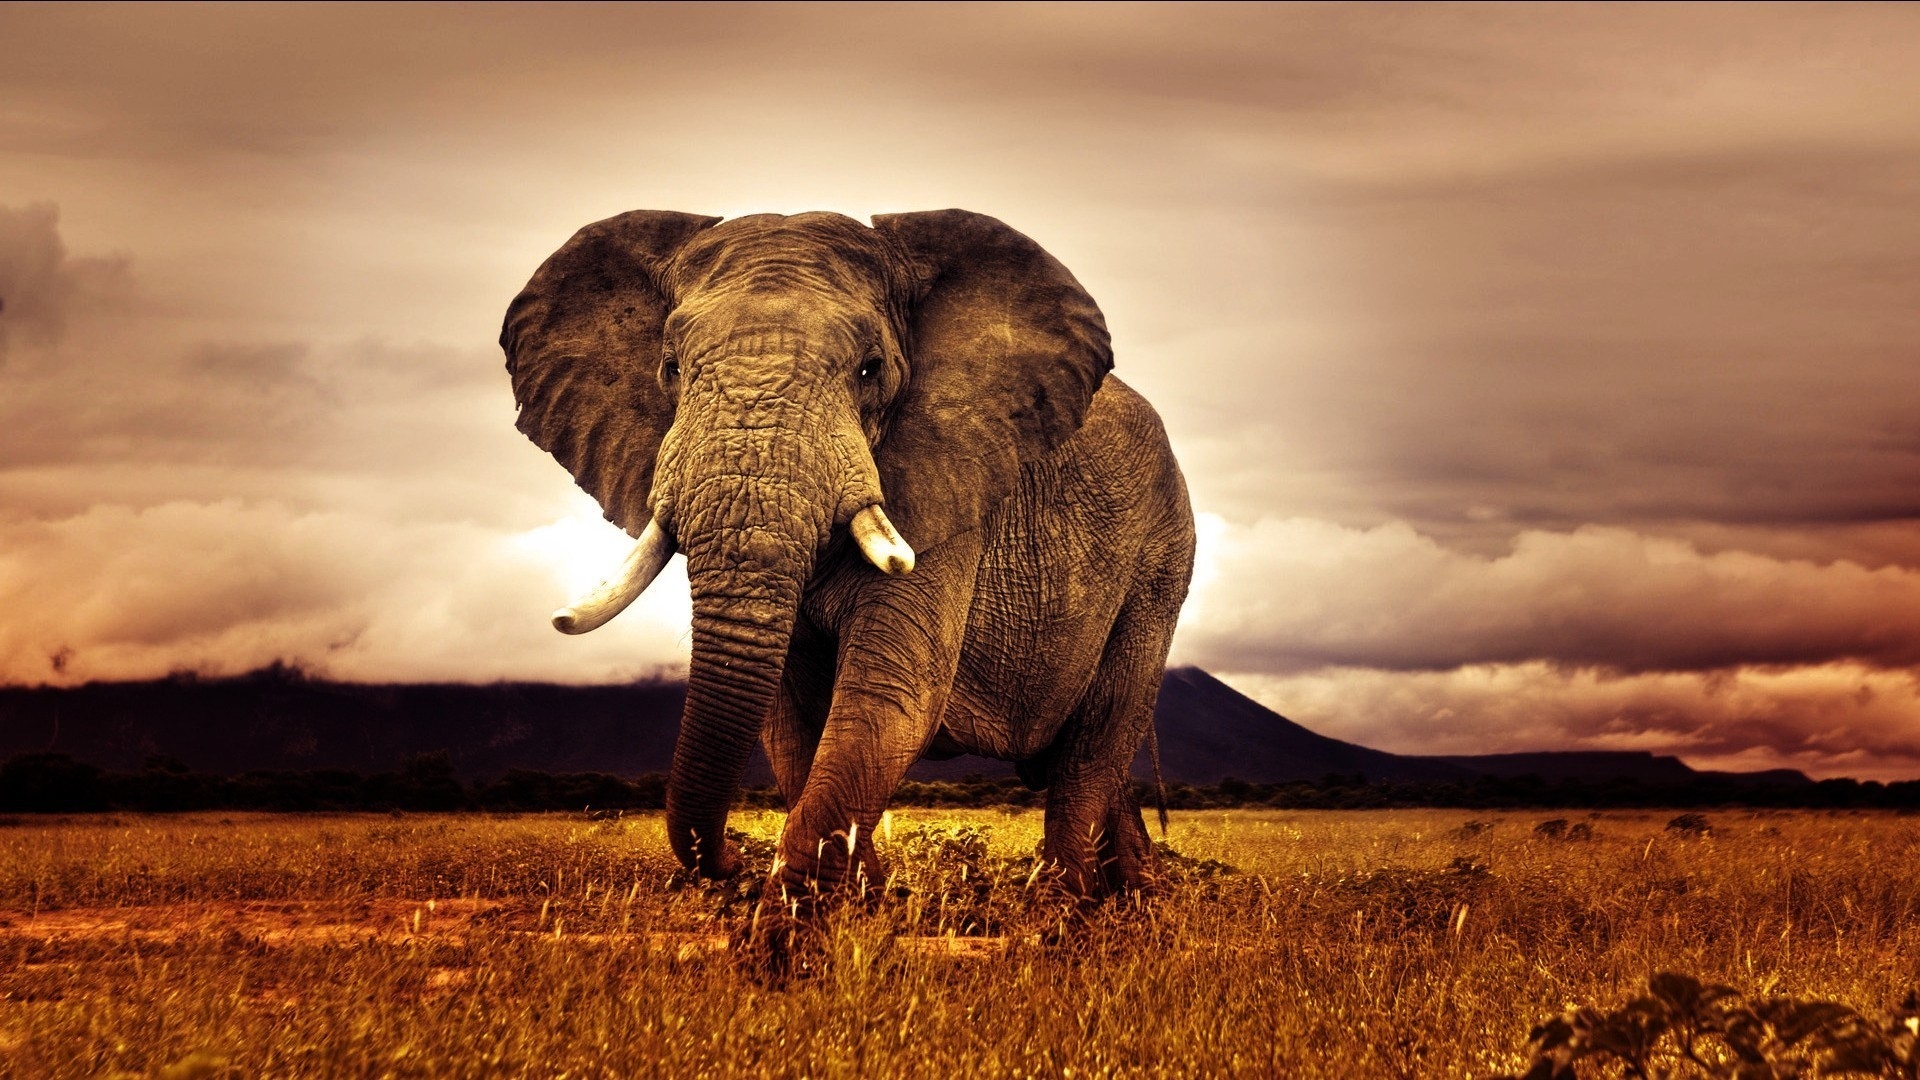 Nature Elephants Africa Wallpaper High Quality